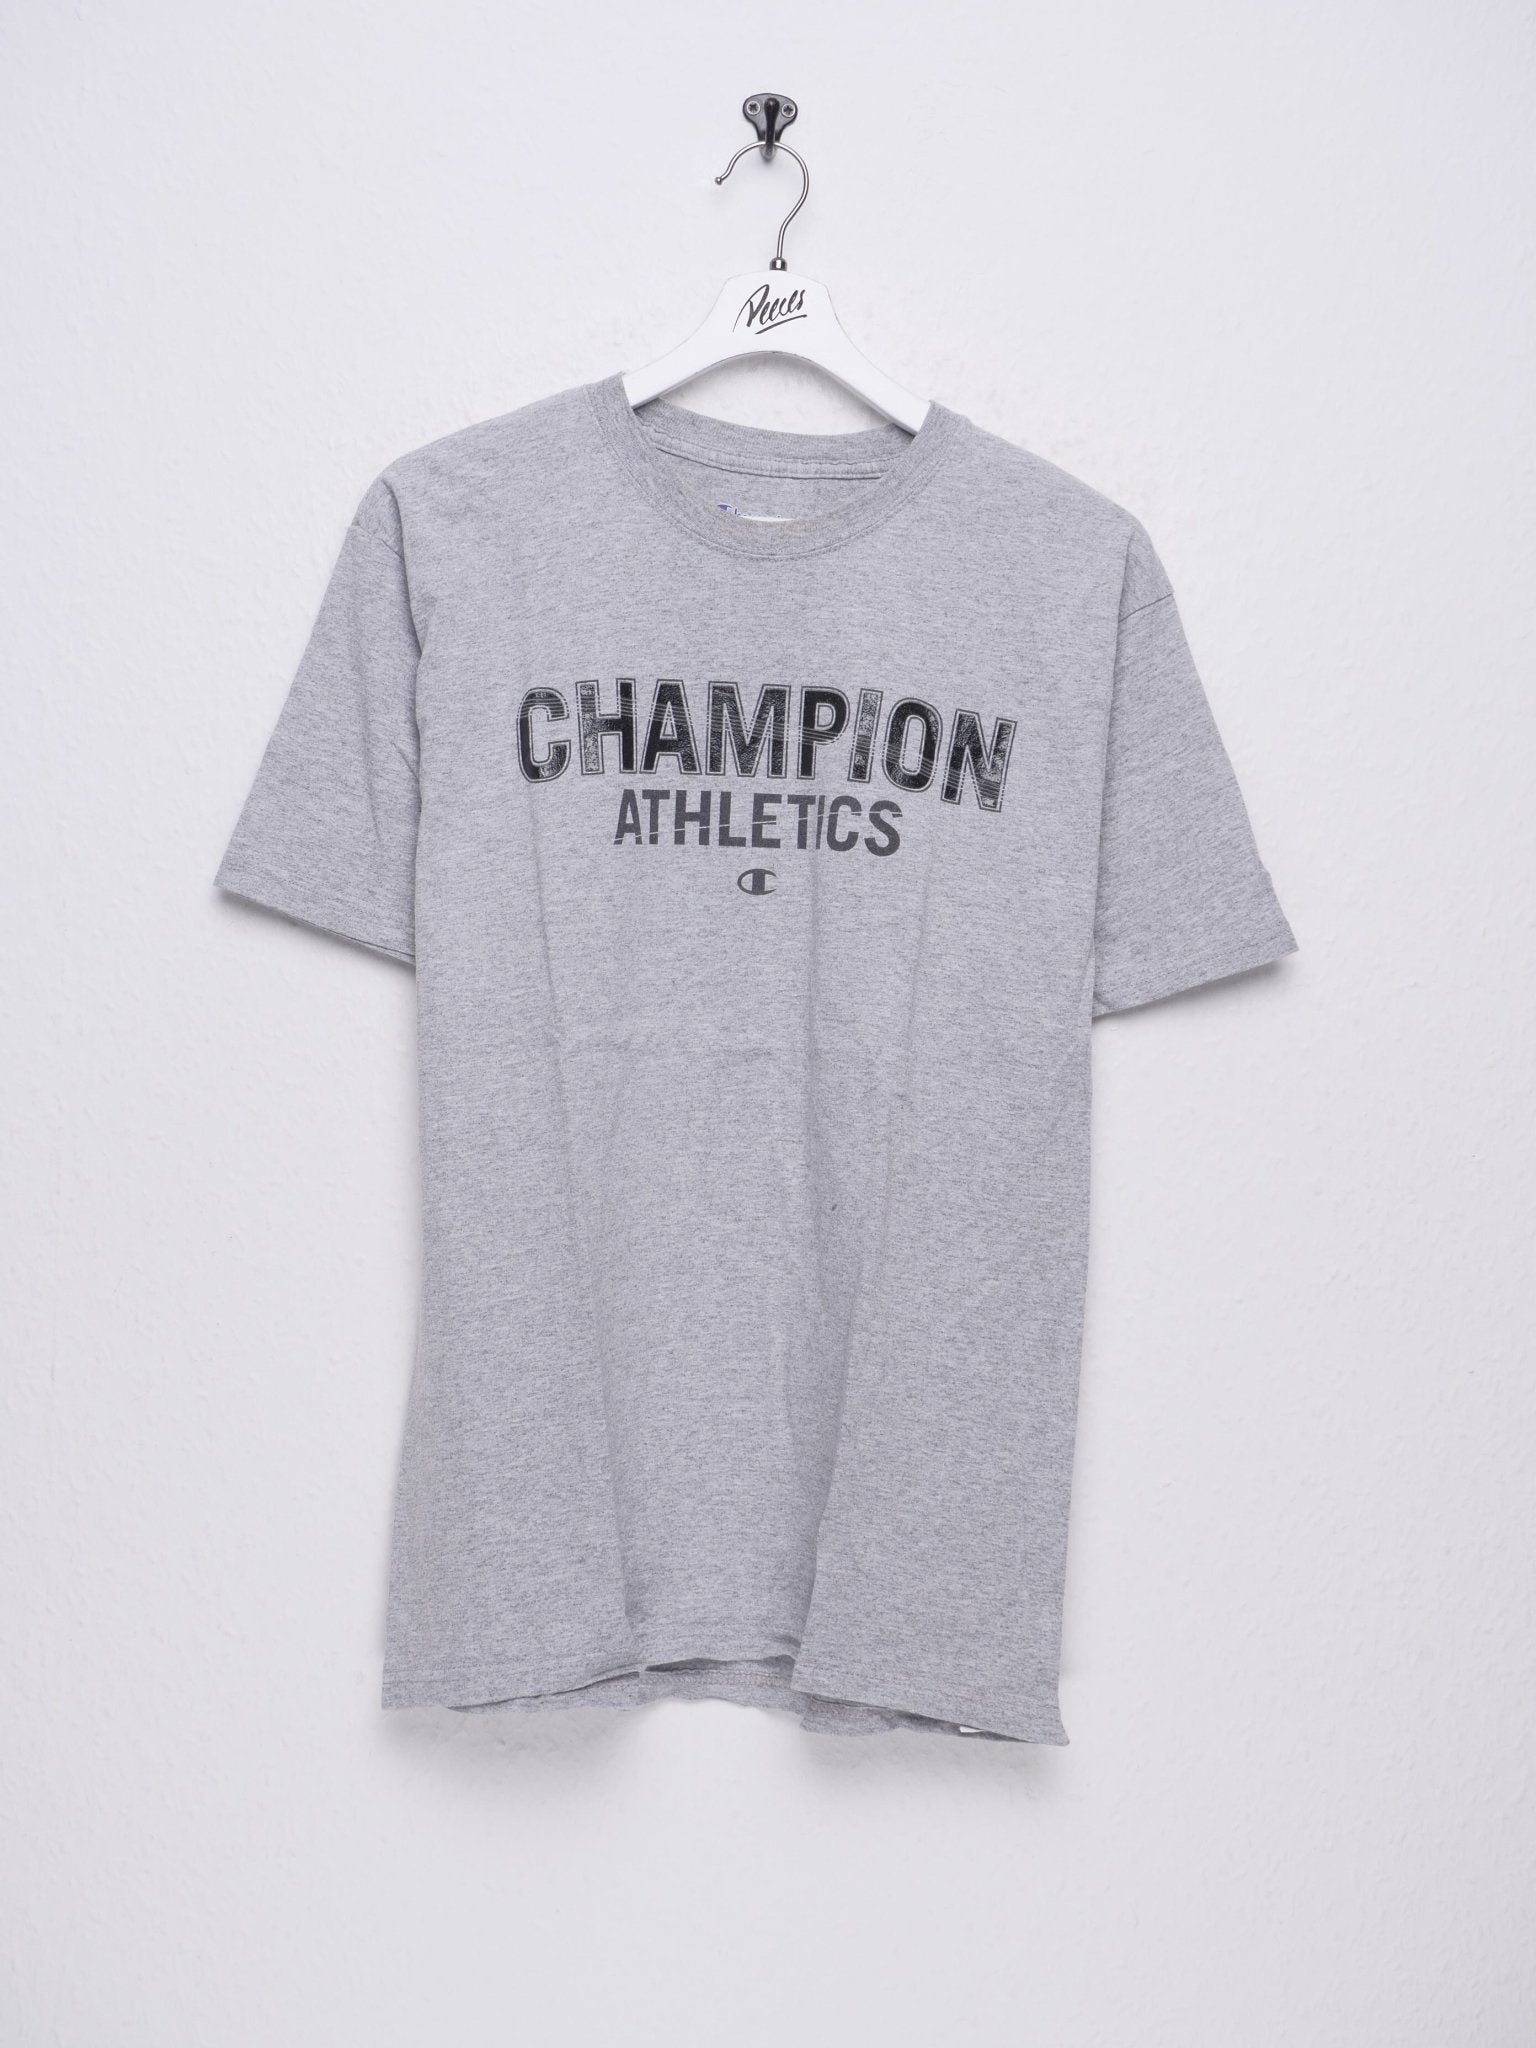 Champion printed Spellout Vintage Shirt - Peeces